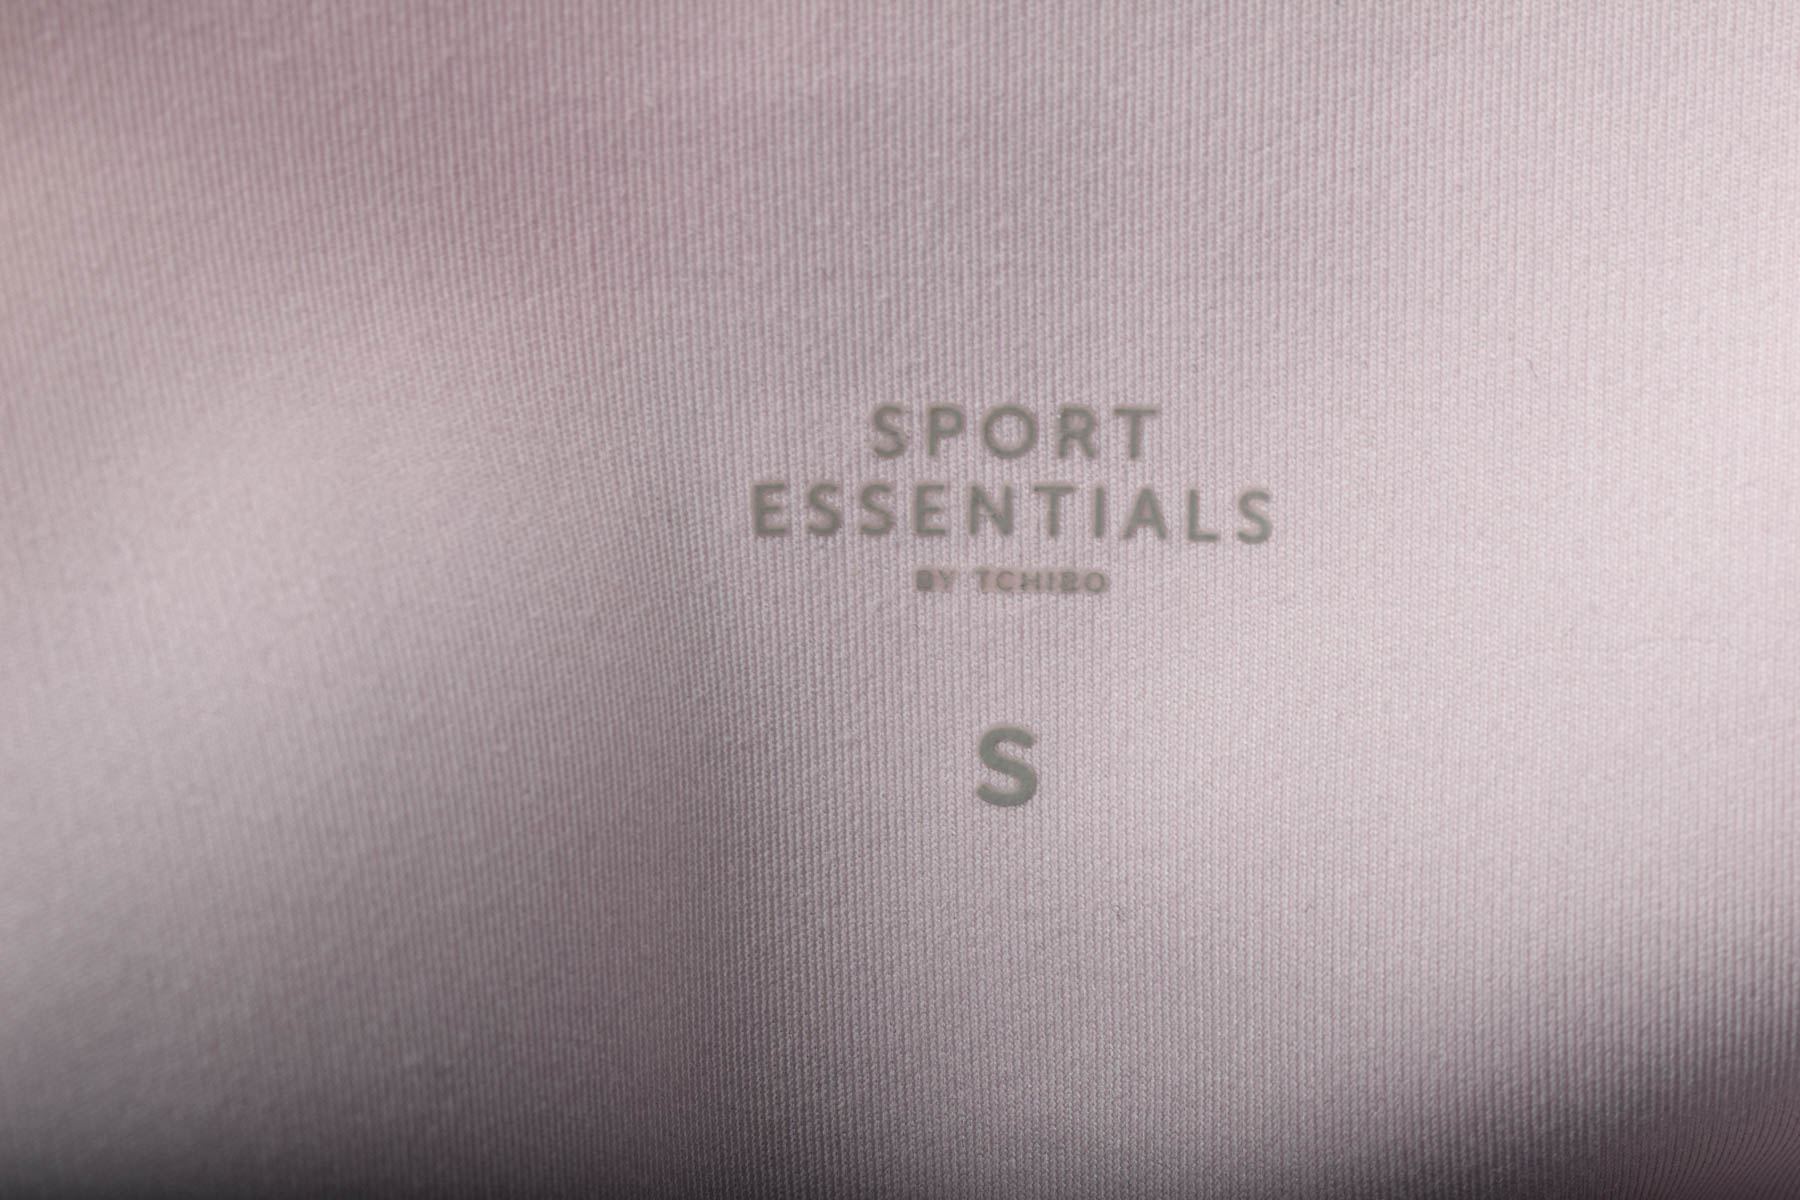 Trening pentru damă - Sport Essentials by Tchibo - 2